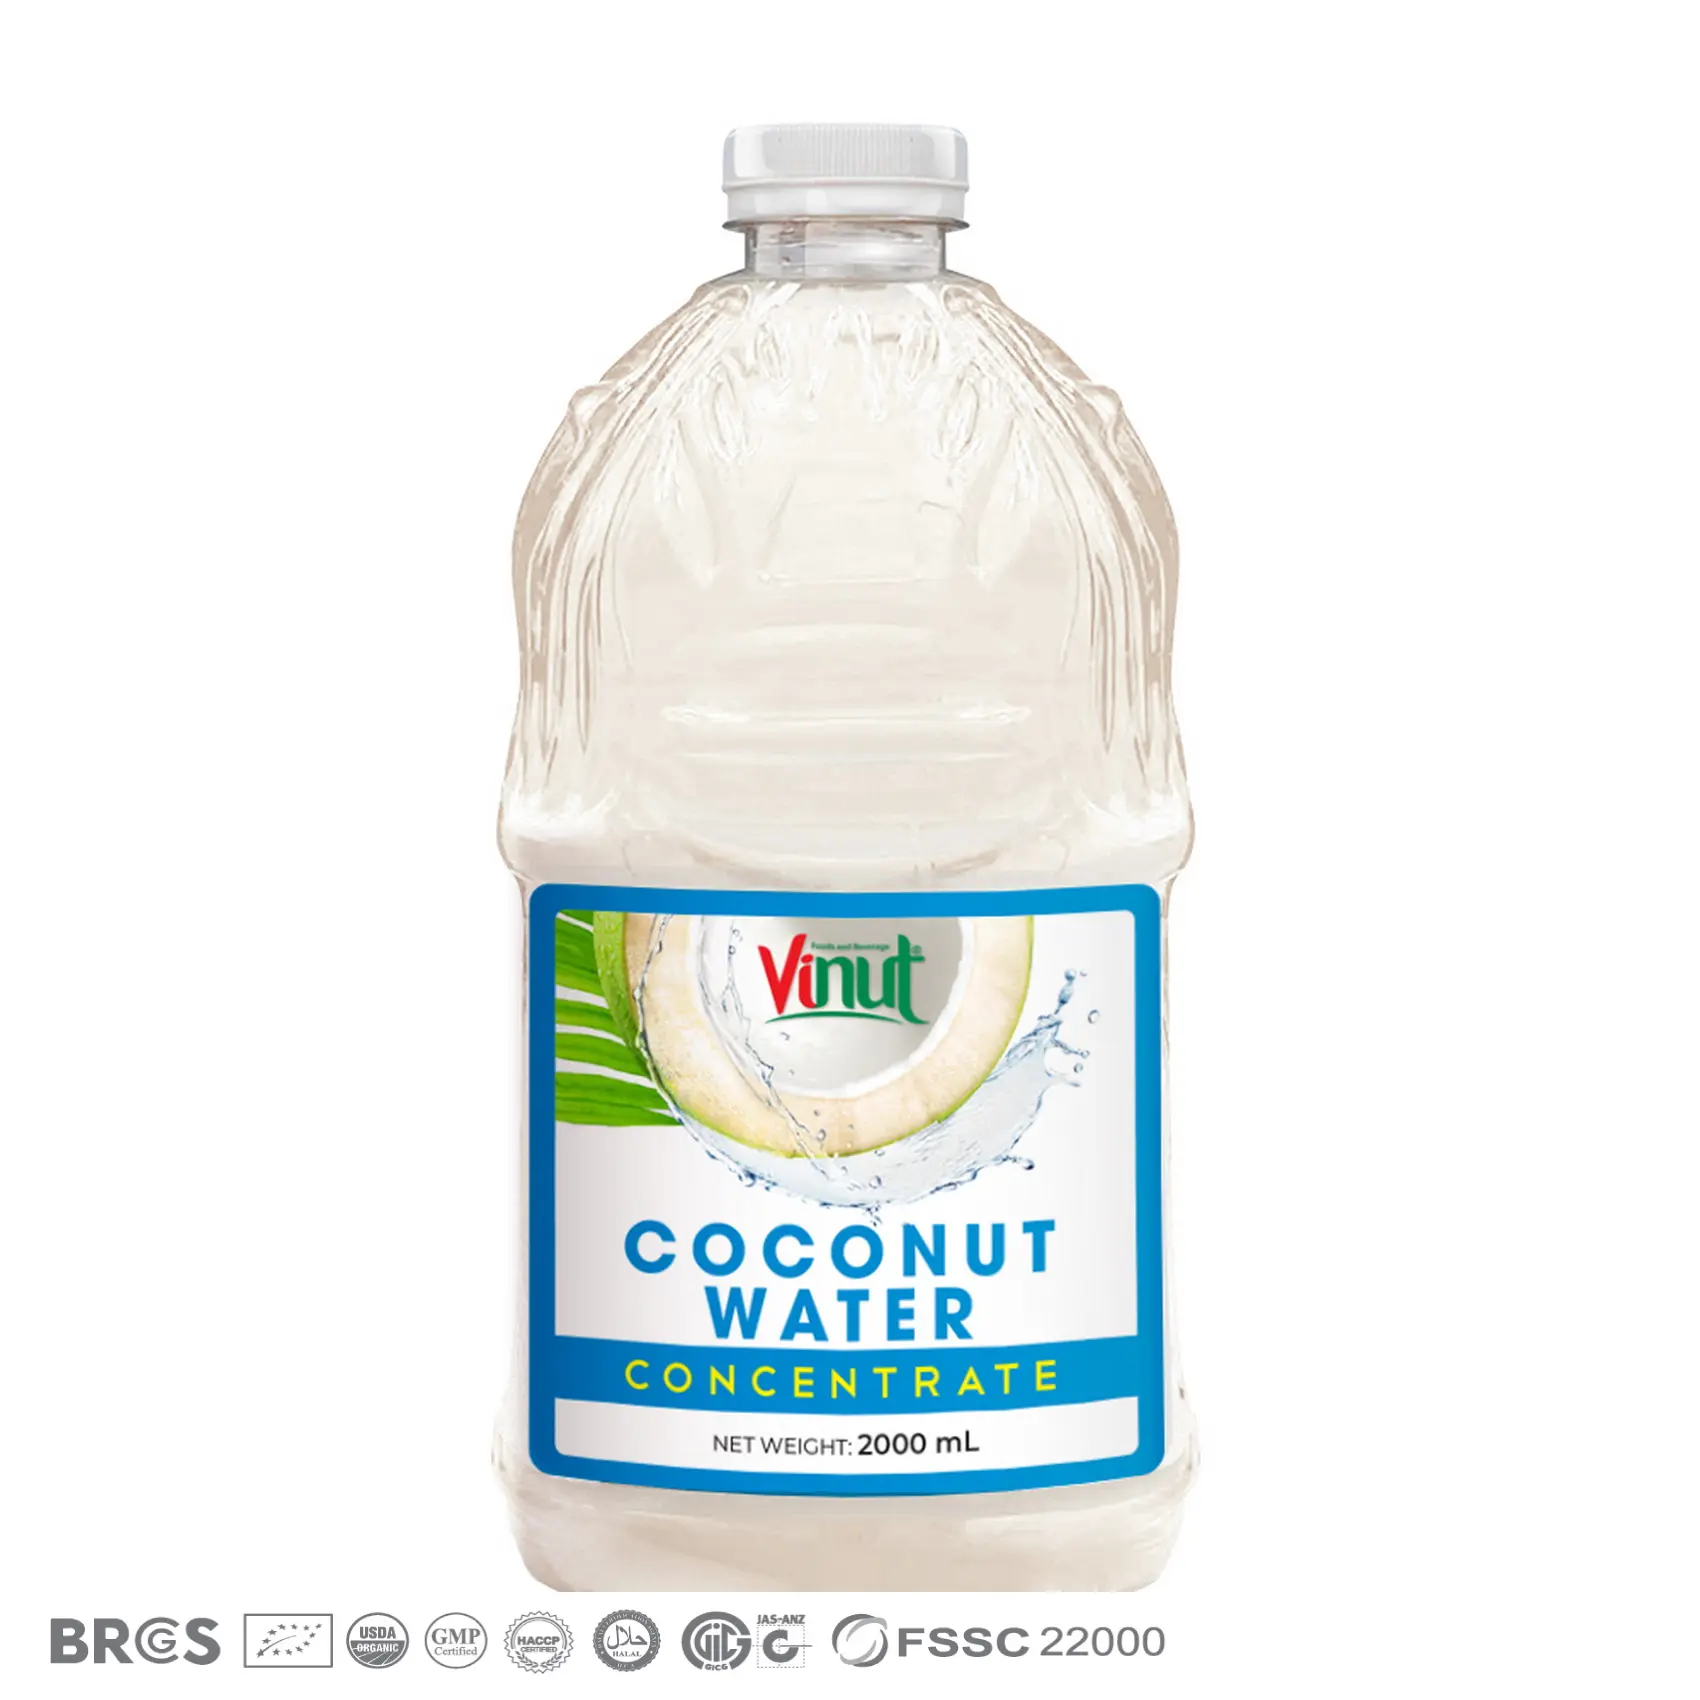 2000mL Pet şişe VINUT hindistan cevizi suyu konsantresi % 100% doğal hindistan cevizi Vietnam fabrika doğrudan satış